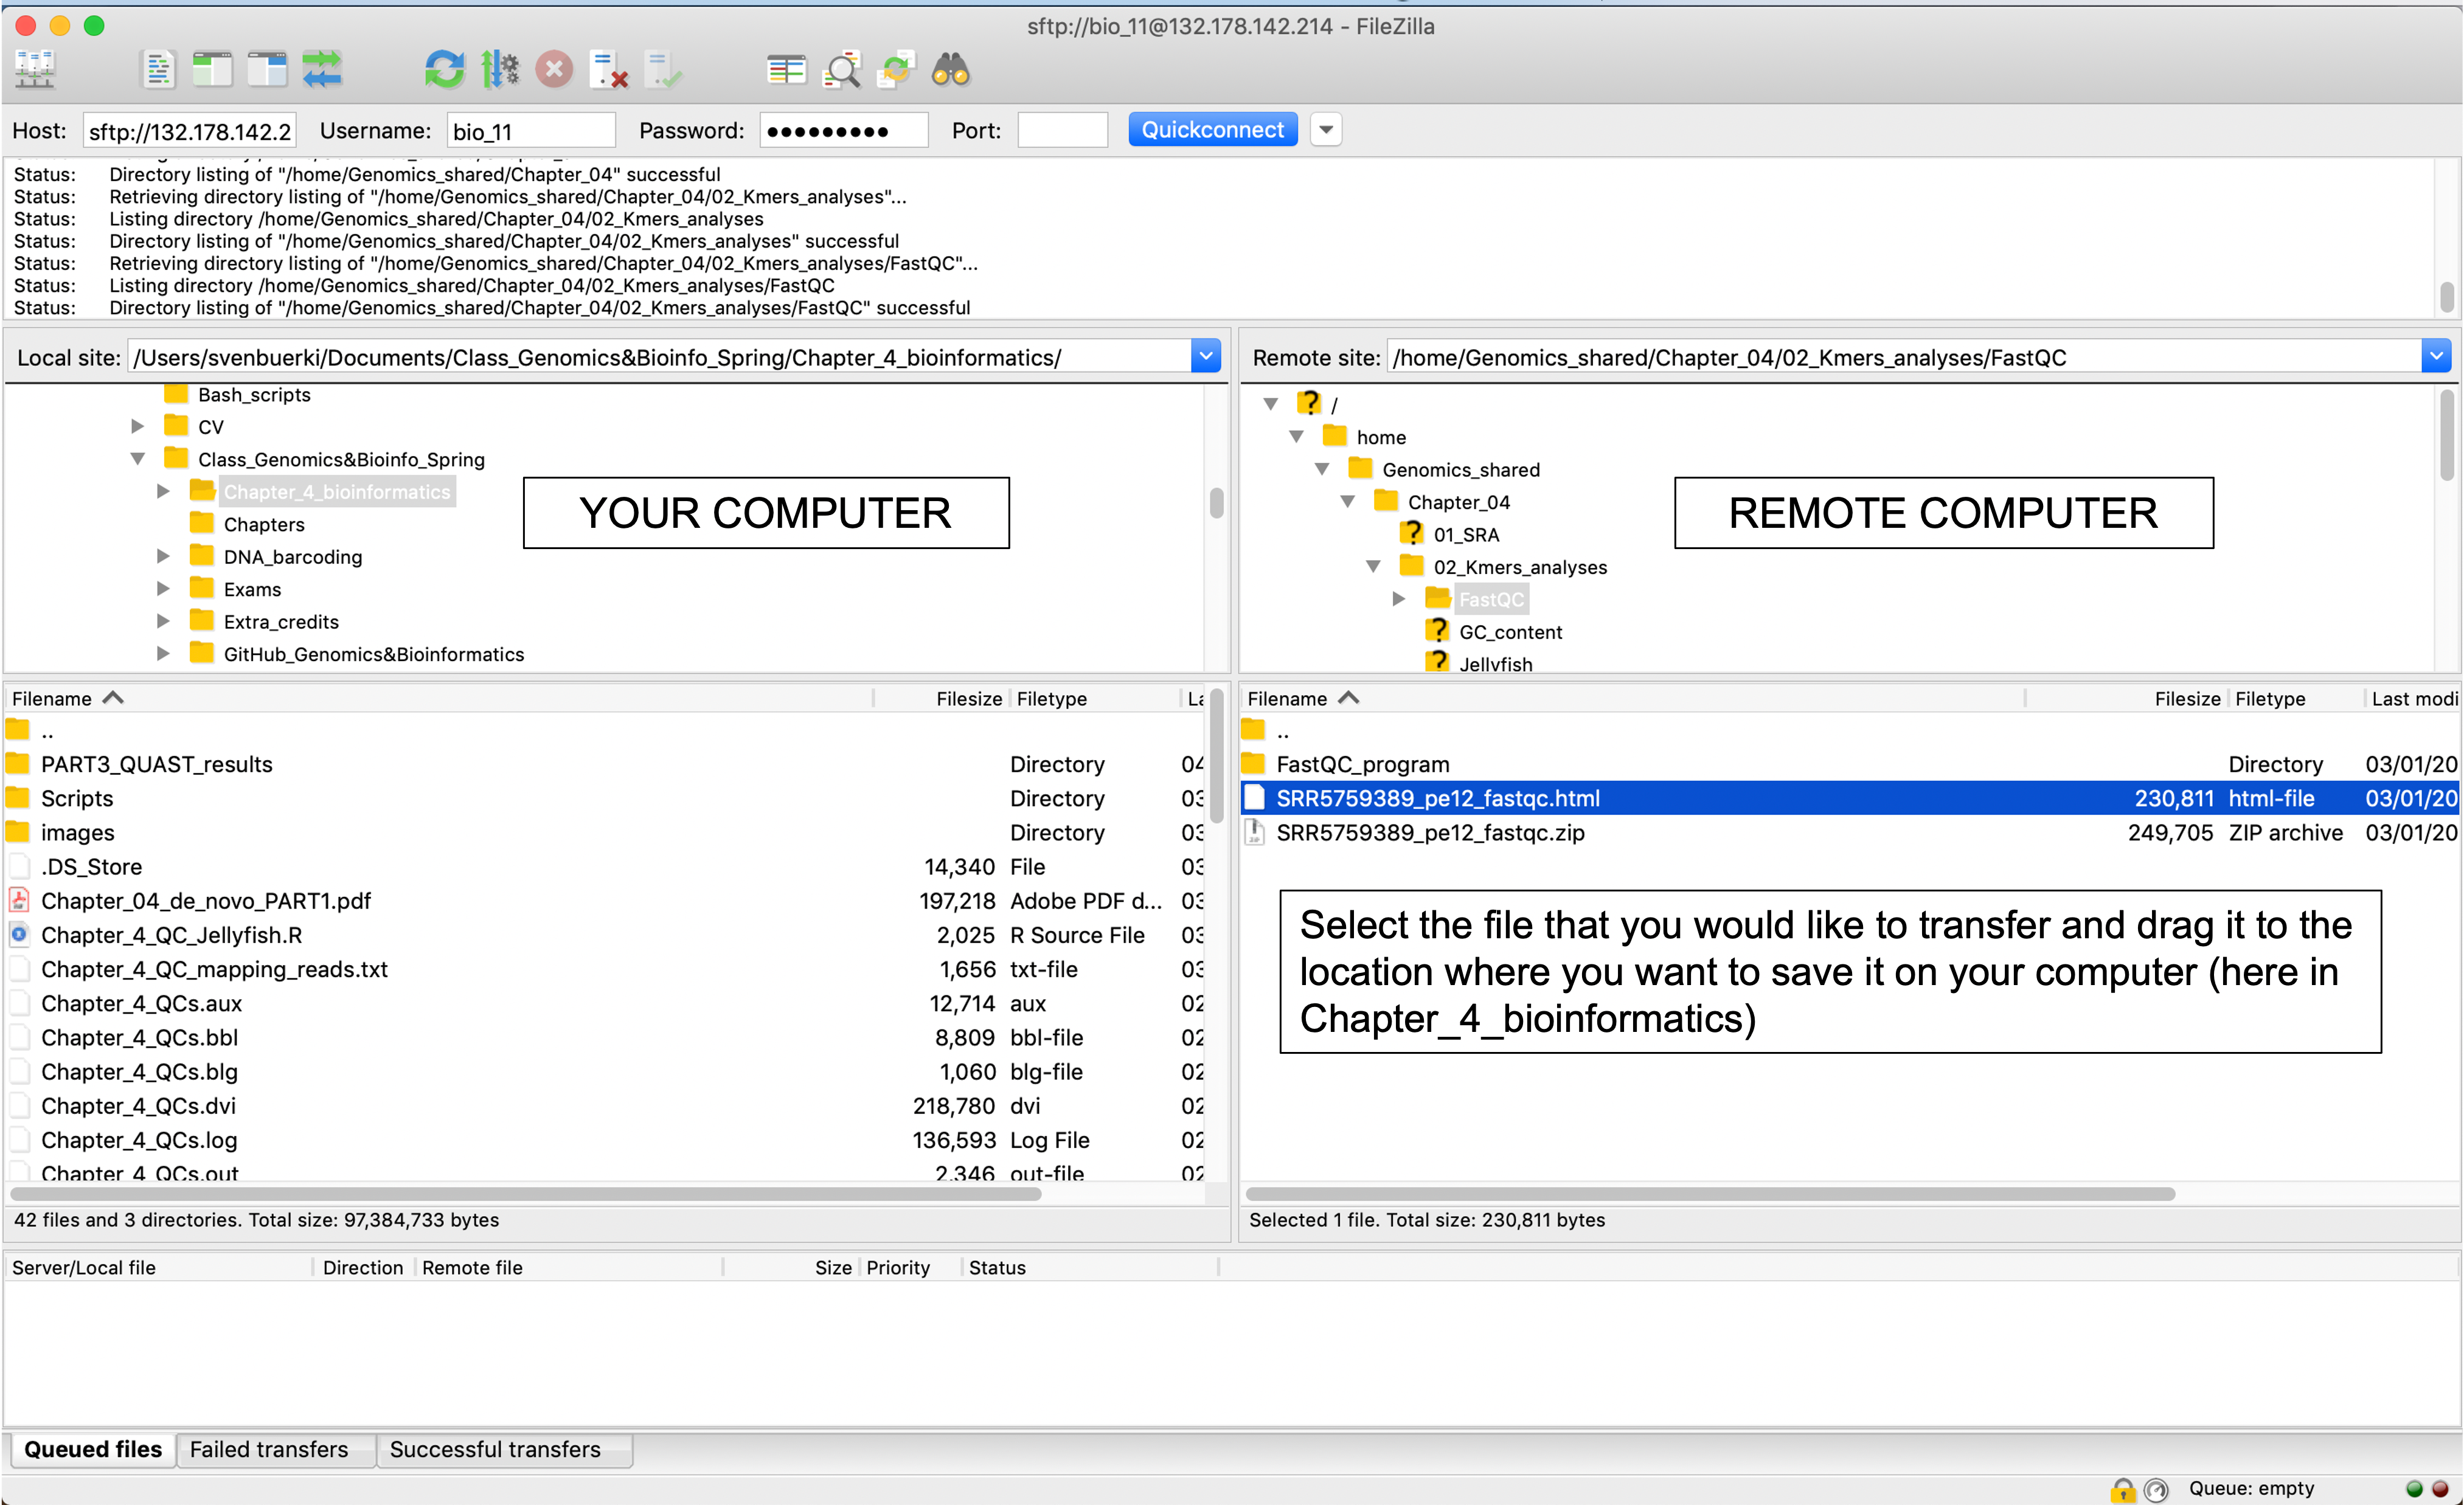 Snapshot of FileZilla program used to transfer files between computers.